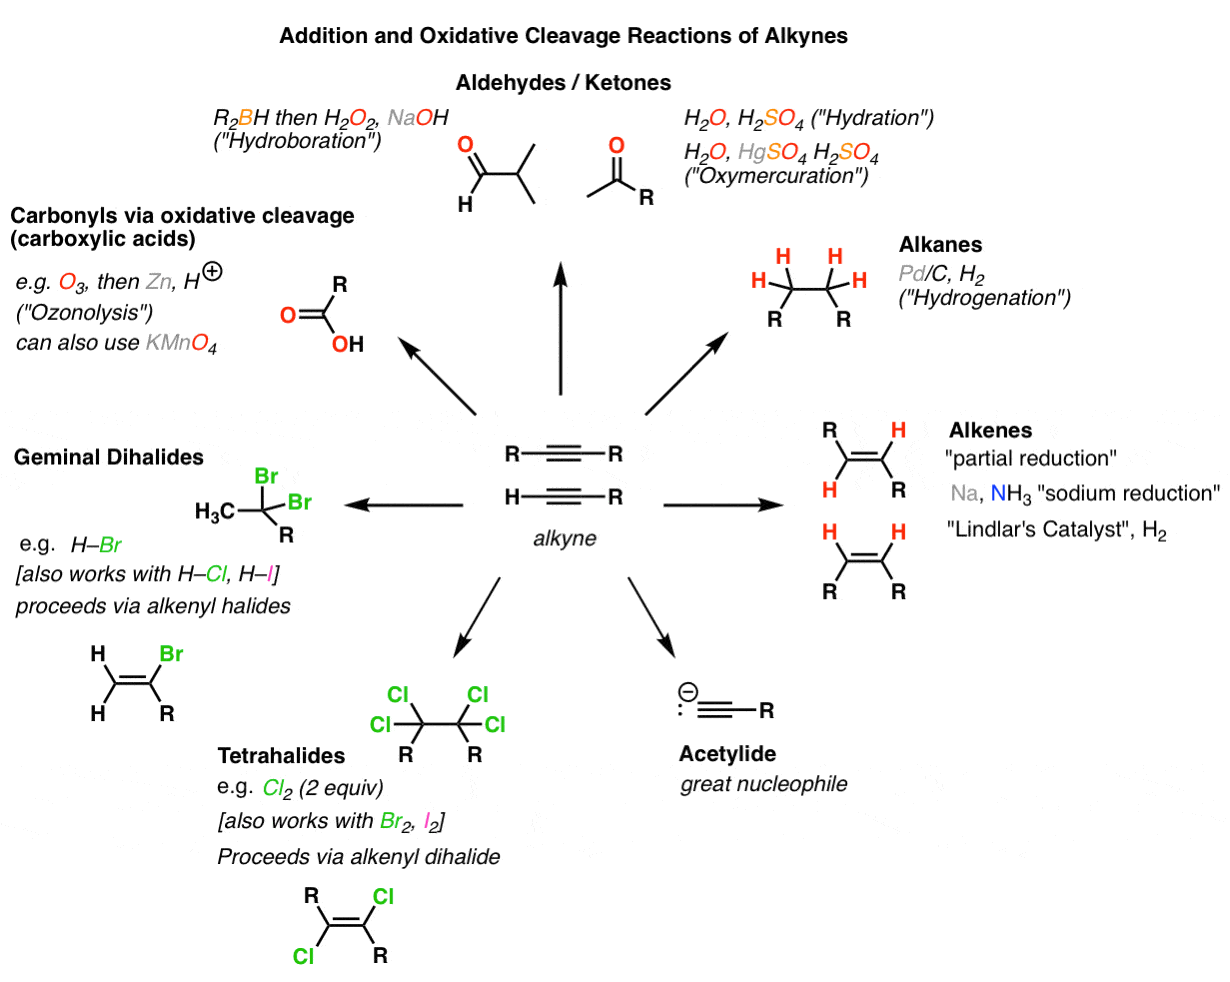 transformations of alkynes gto give aldehydes ketones alkanes alkenes cis trans acetylides tetrahalides dihalides carbonyls